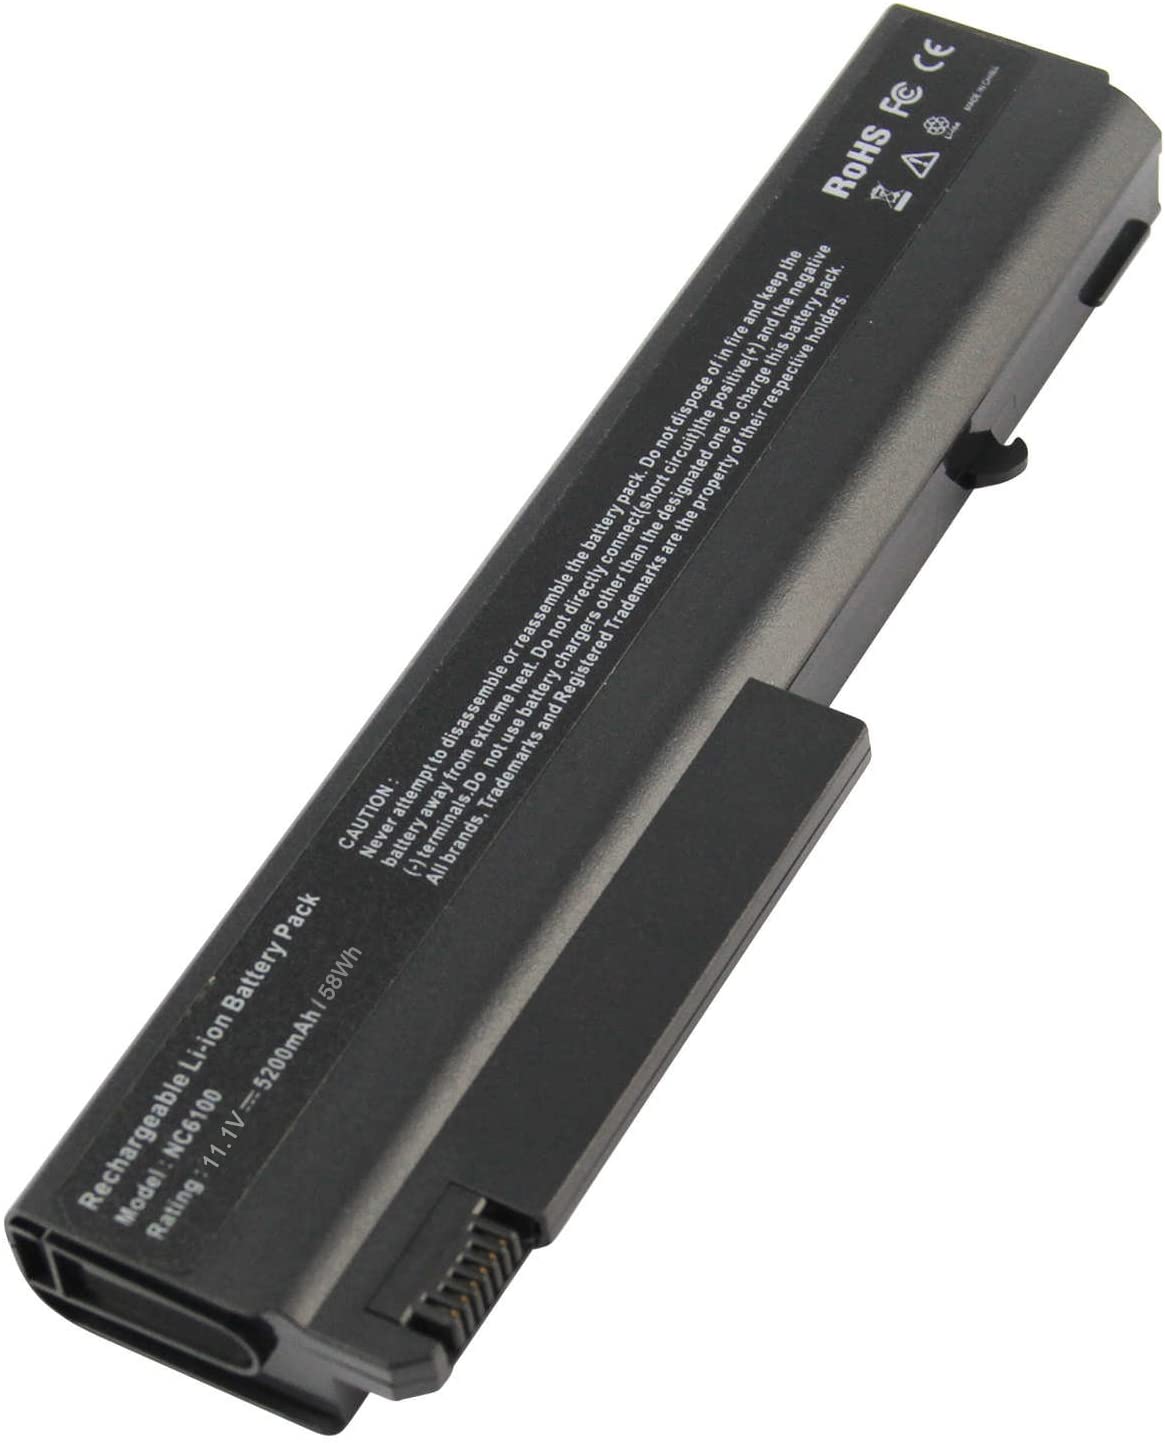 HP Compaq NC6400 battery for Compaq NC6400